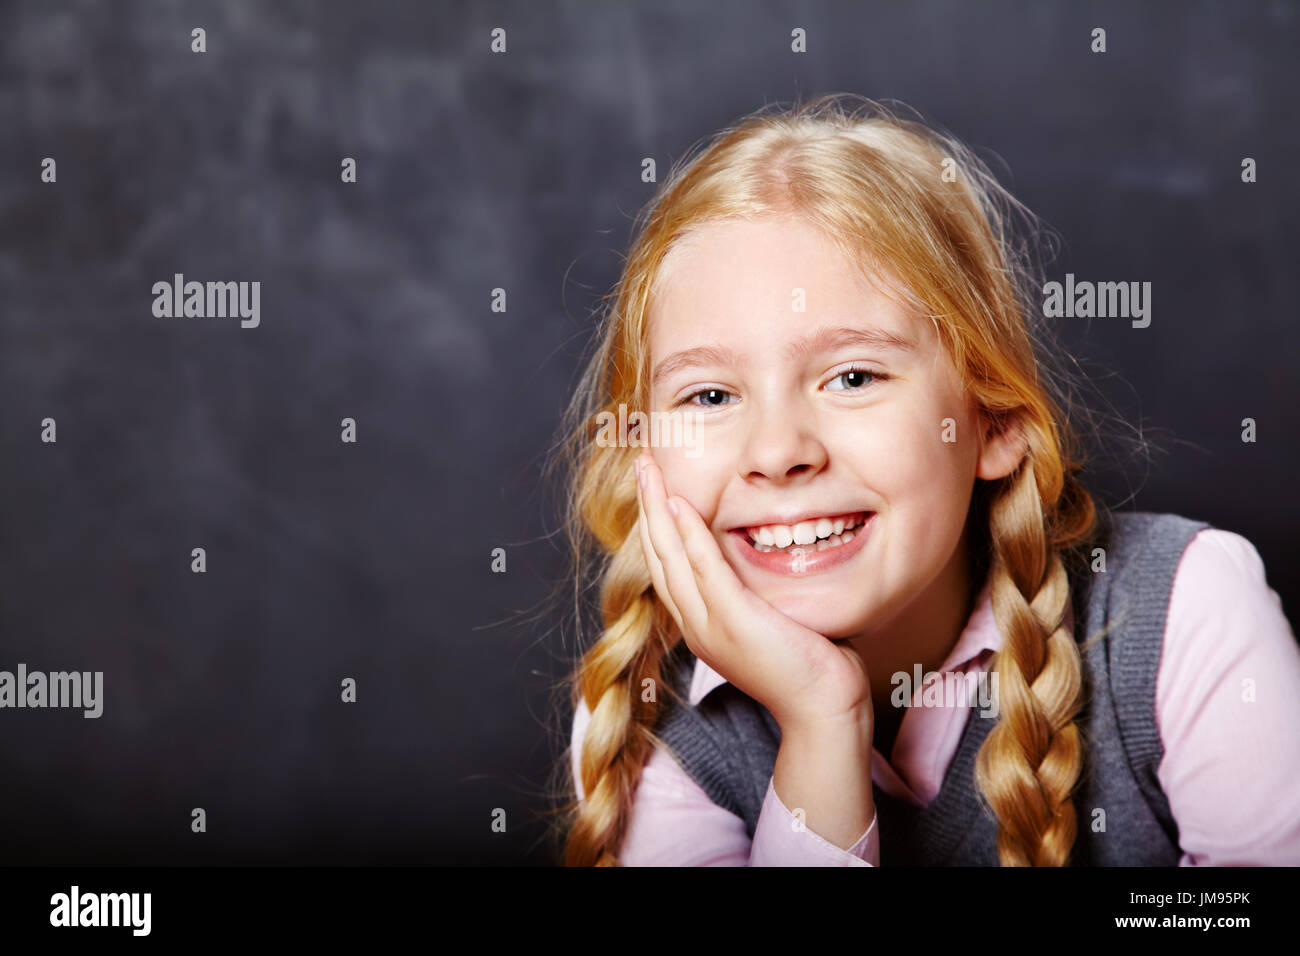 schoolchild on blackboard background Stock Photo